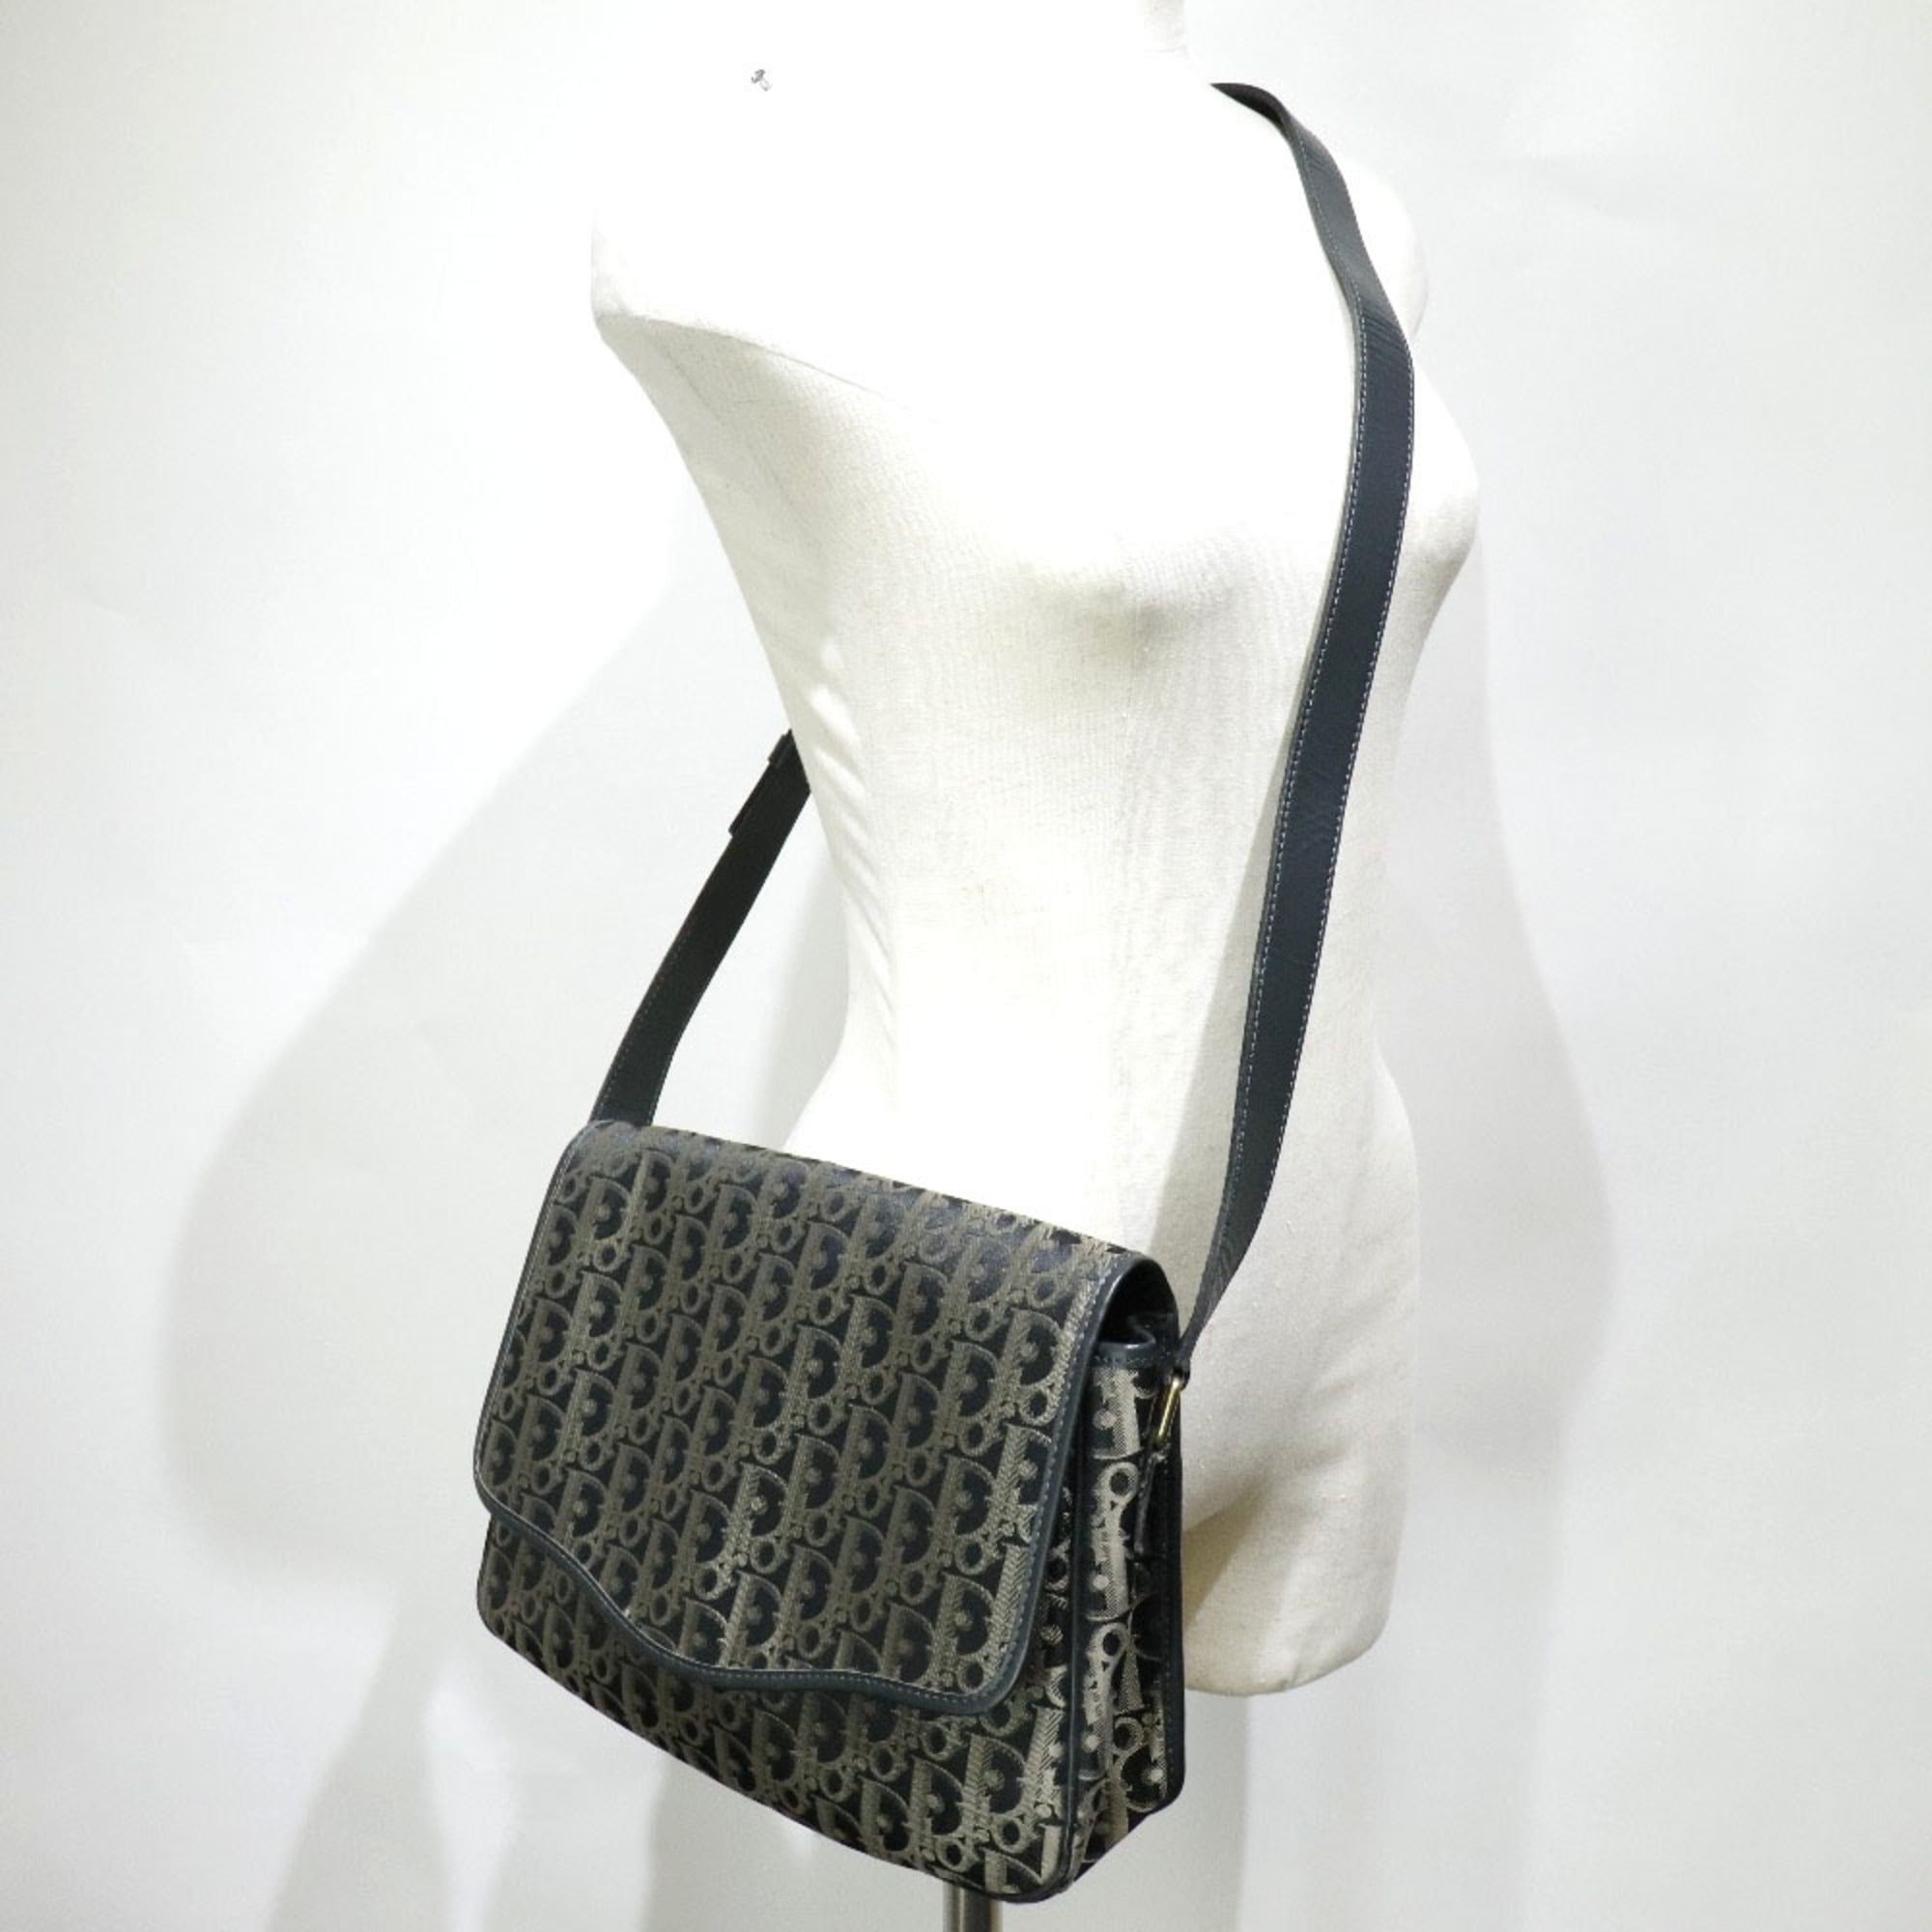 Black Trotter Coated Canvas & White Leather Mini Saddle Bag – Yard of Deals